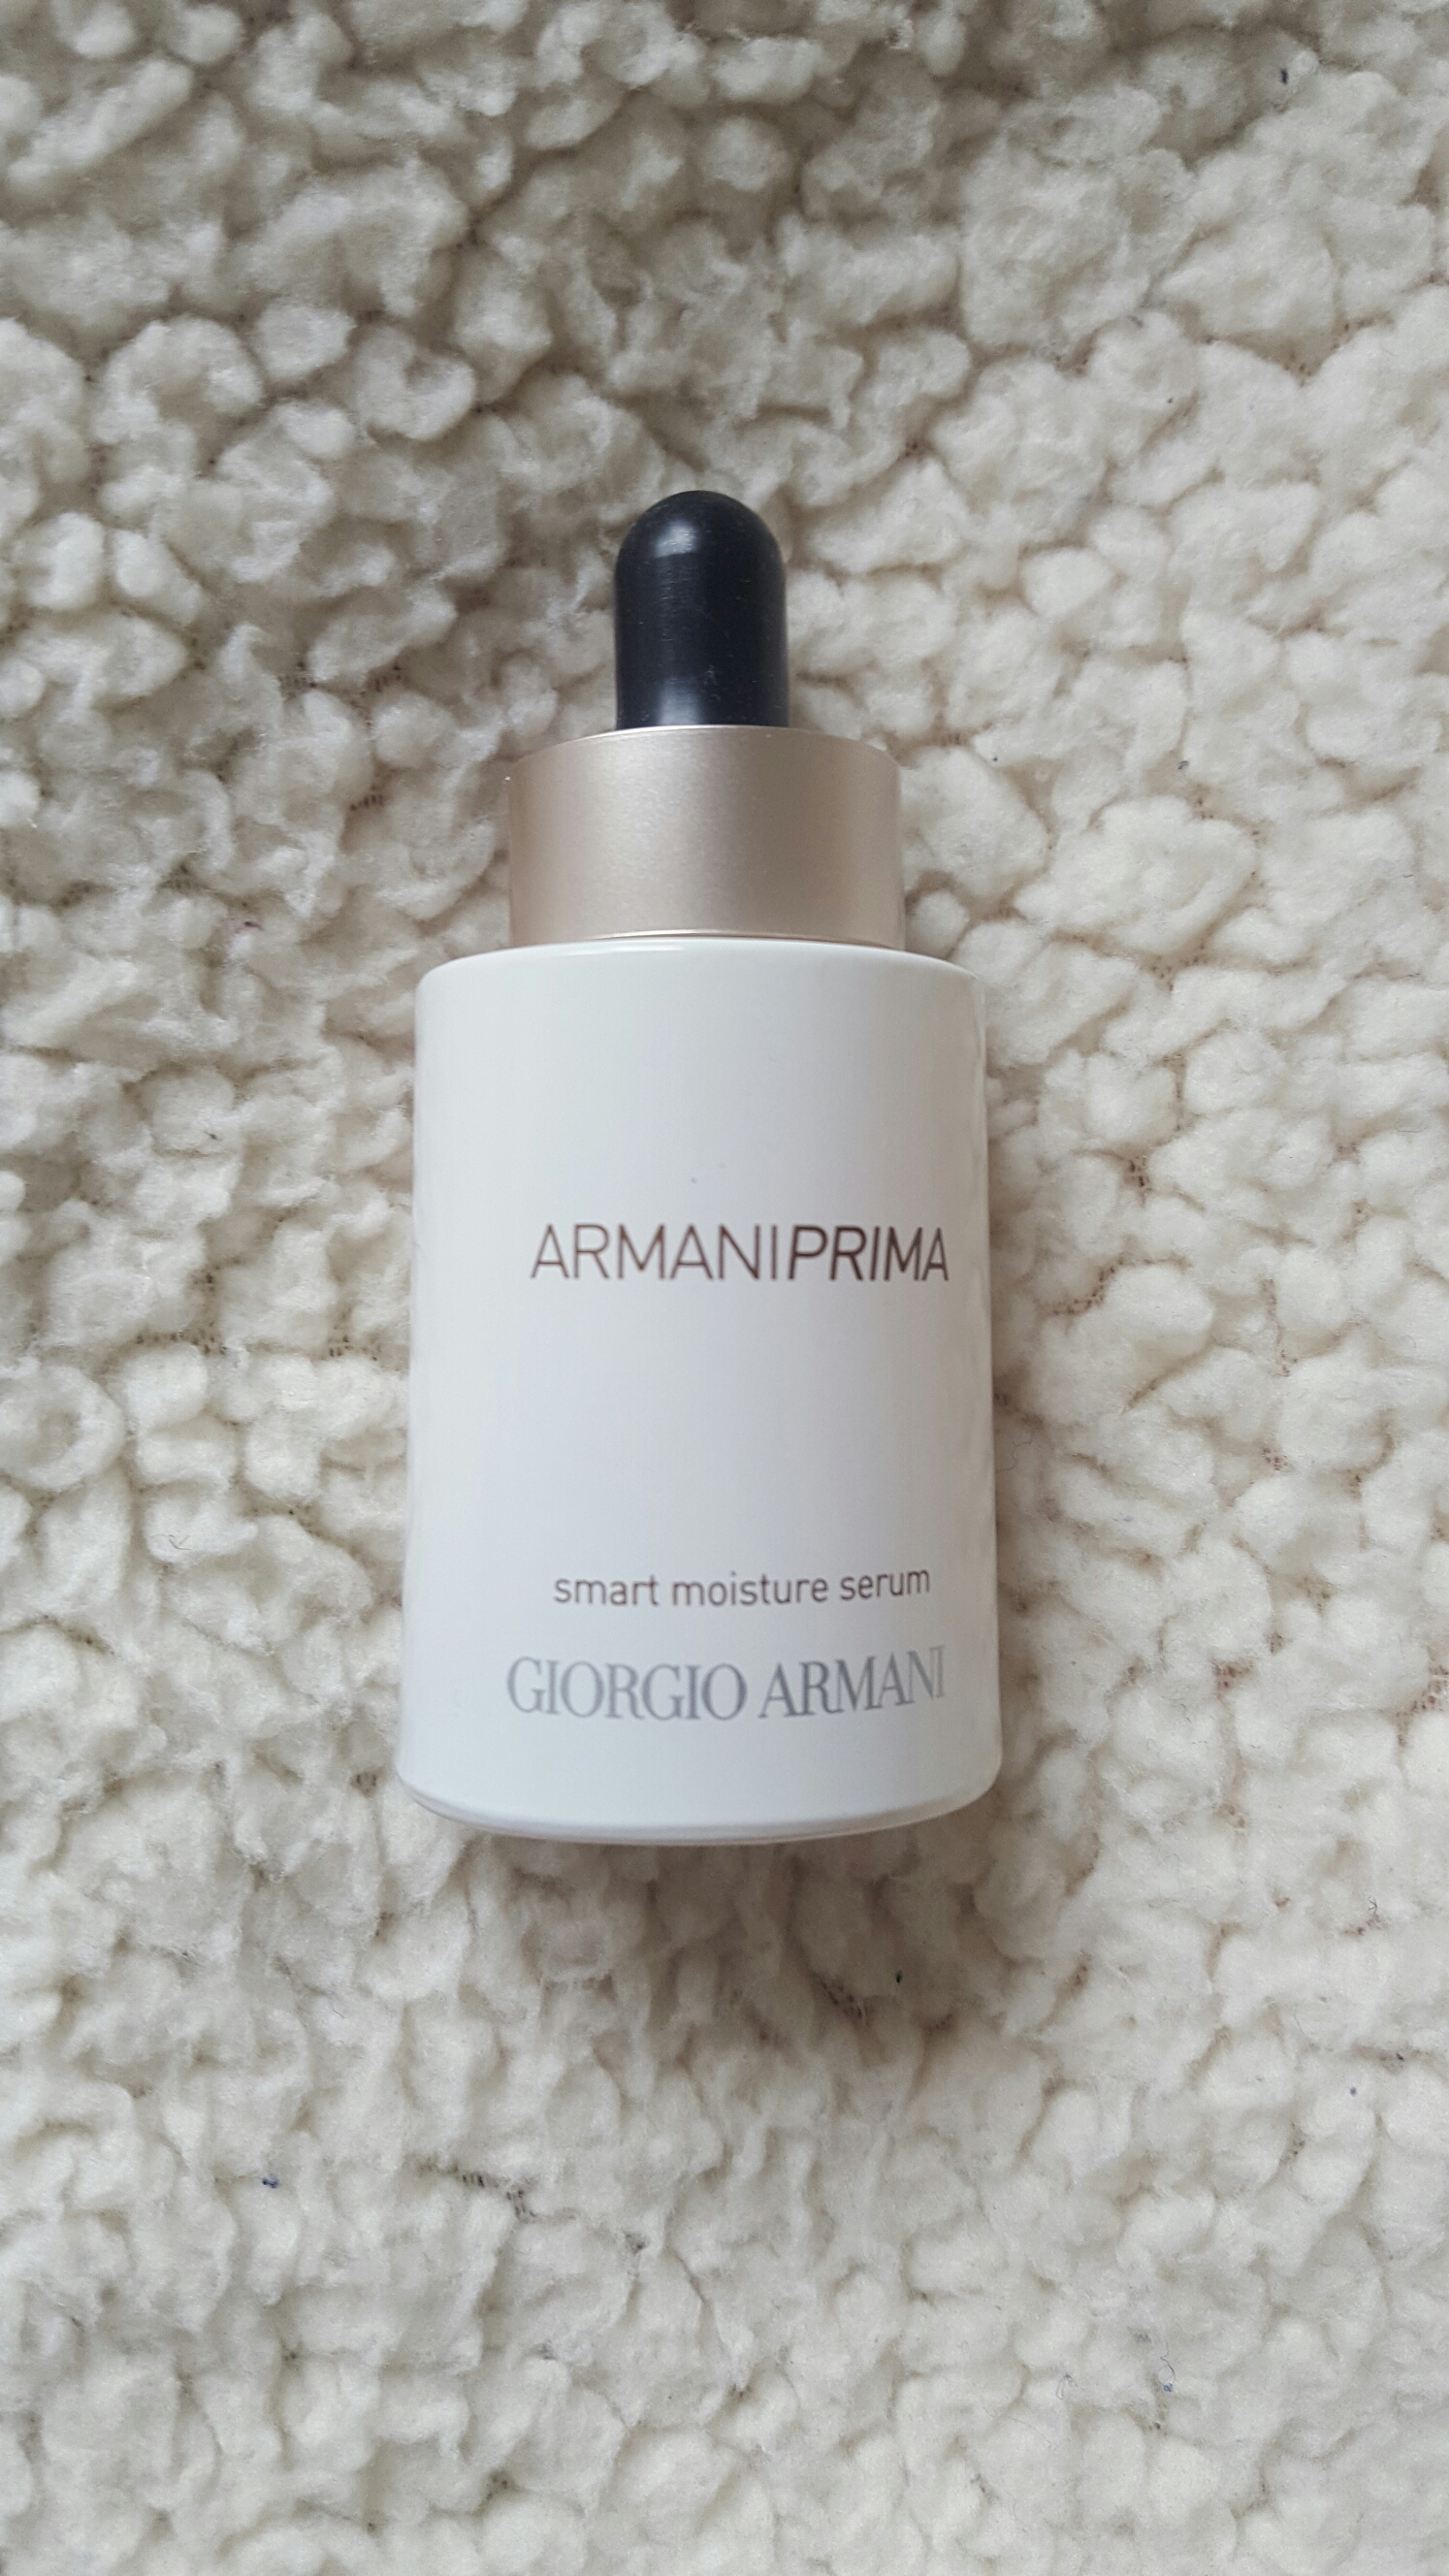 armani prima refreshing makeup fix reviews